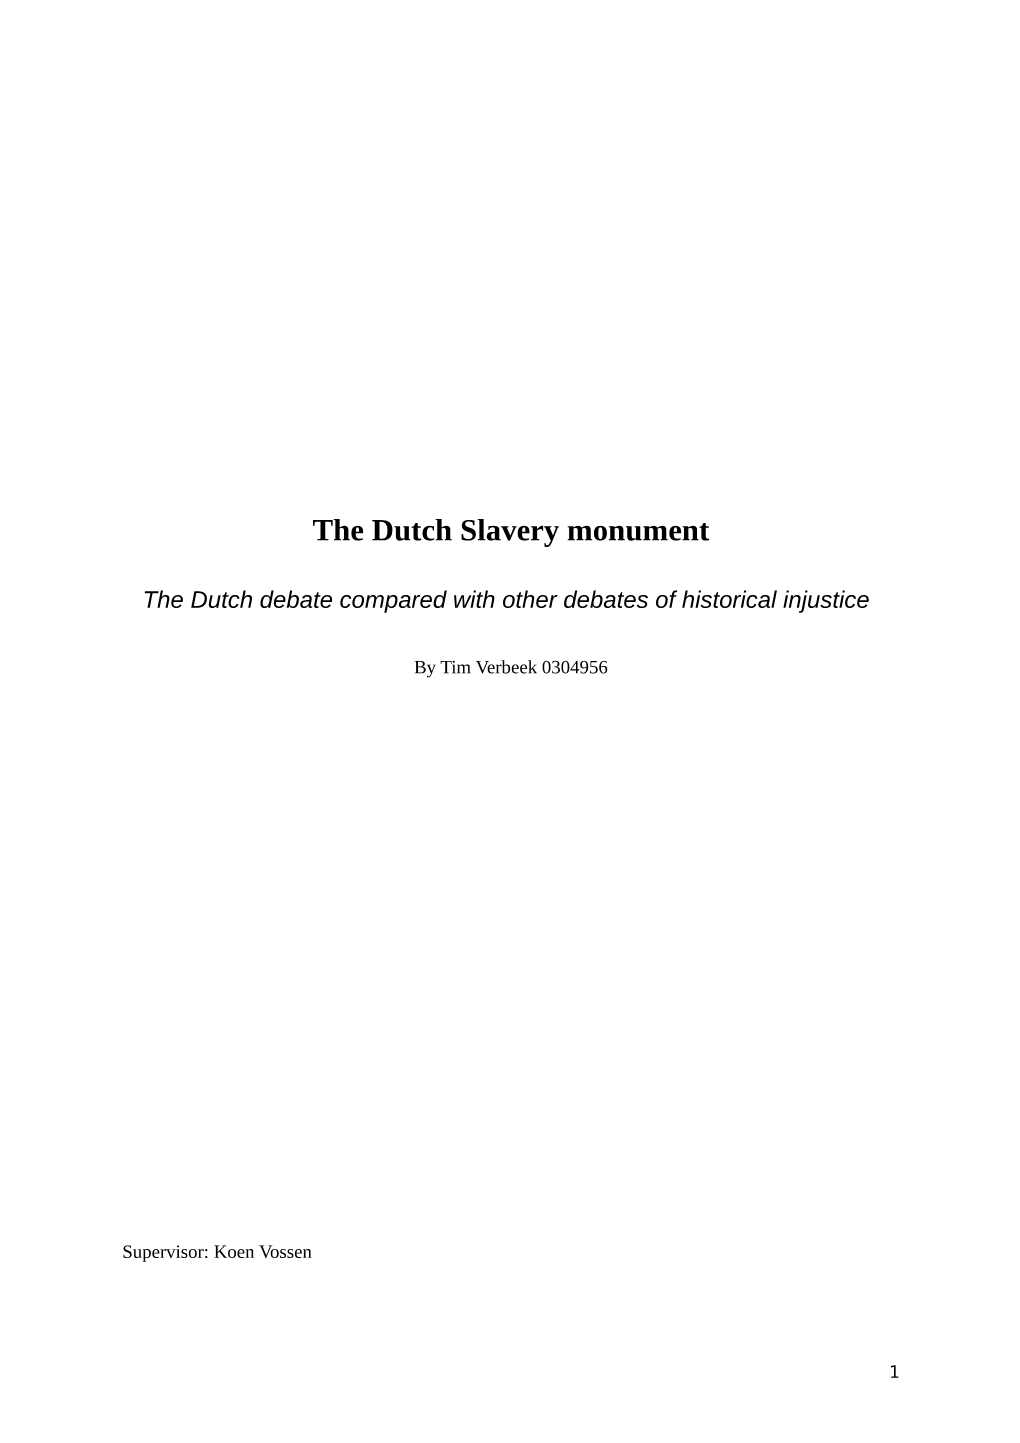 The Dutch Slavery Monument